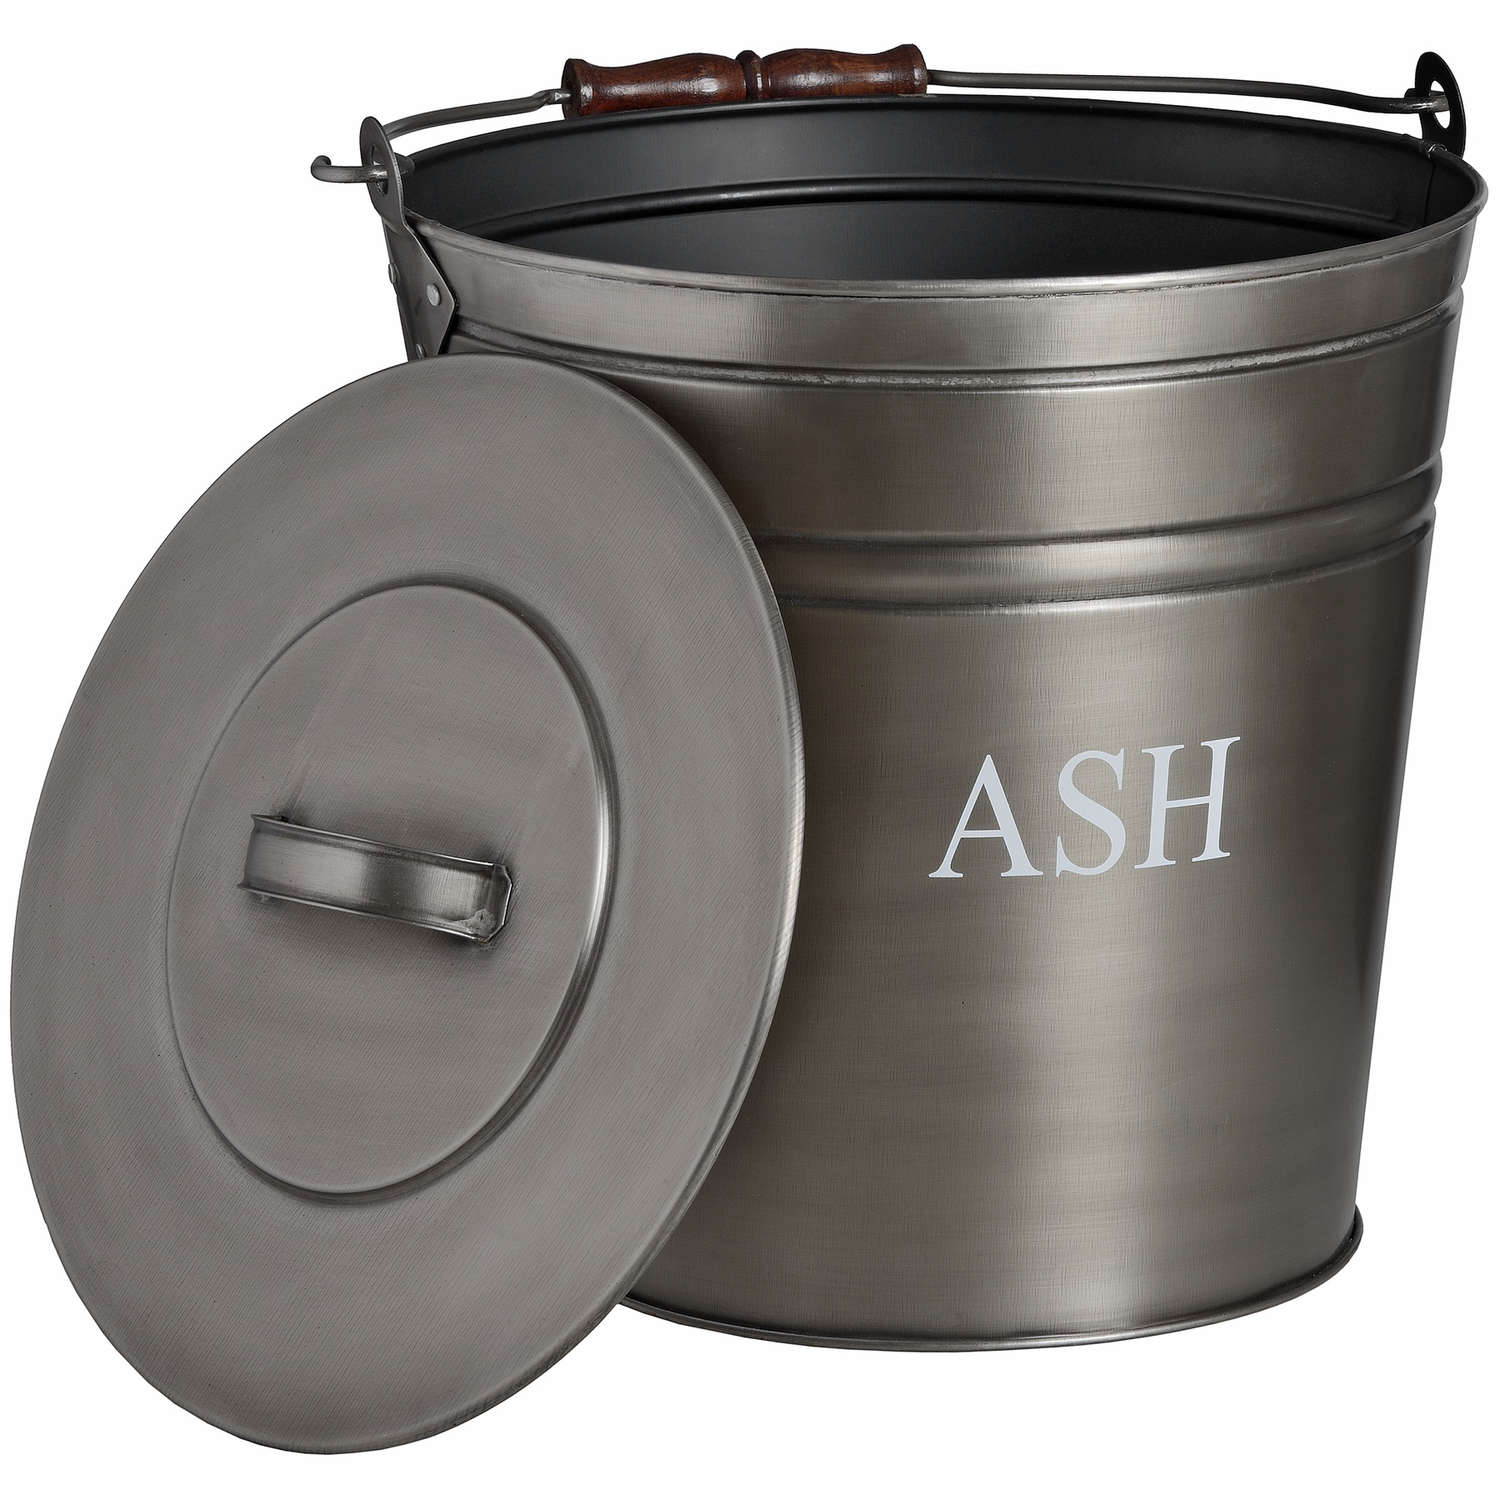 Antique Pewter Ash Bucket - Image 2